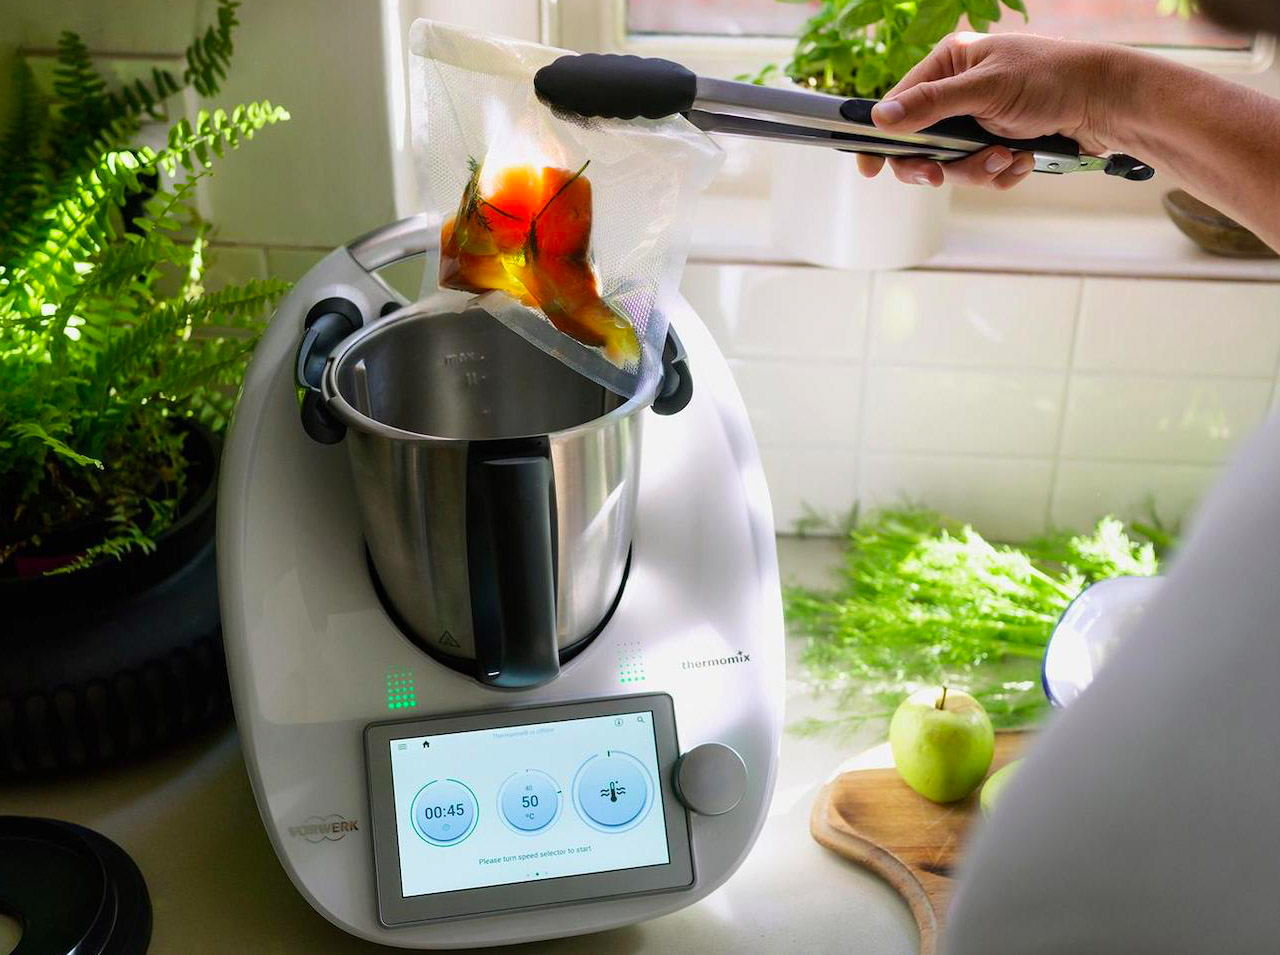 https://www.yankodesign.com/images/design_news/2021/07/smart-kitchen-appliances/smart_kitchen_appliance_ds_yanko_design-13.jpg